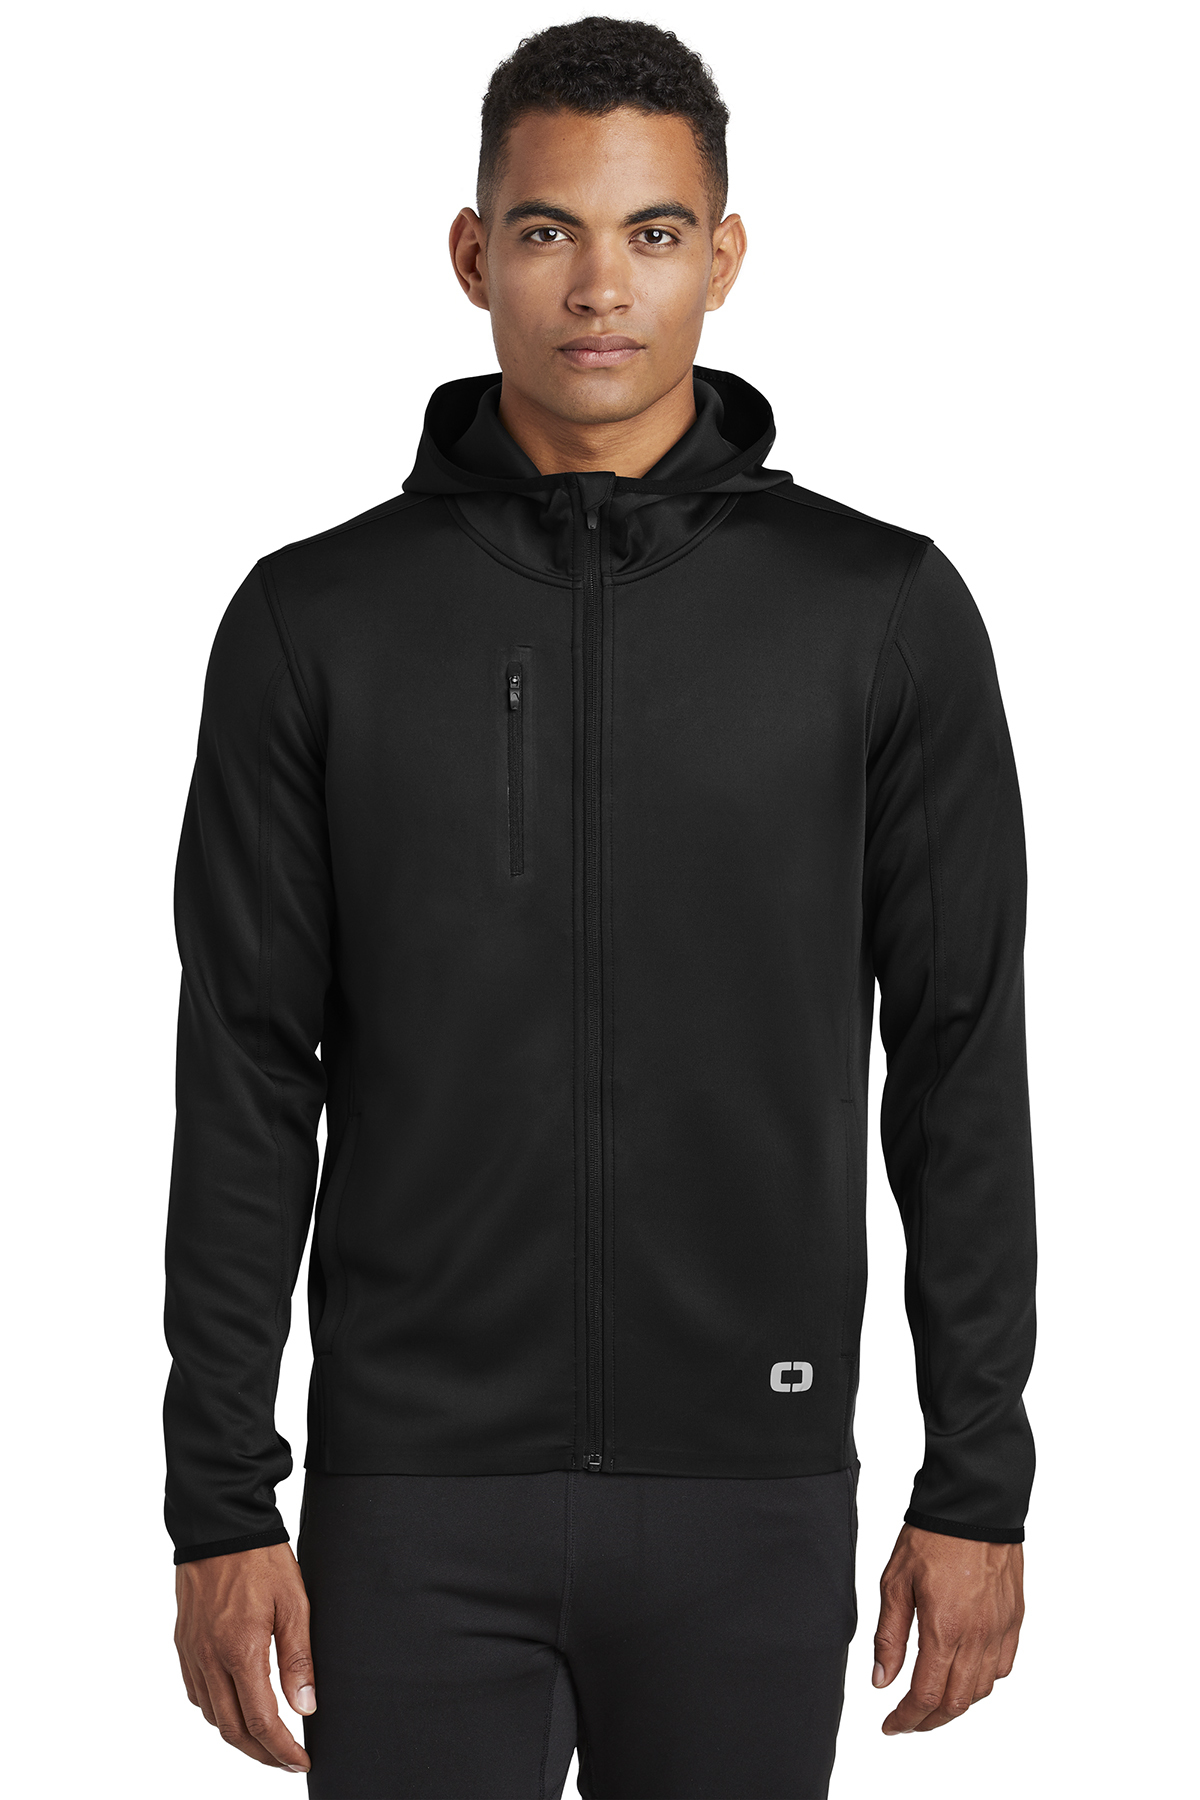 OGIO ® ENDURANCE Stealth Full-Zip Jacket | Outerwear | SanMar